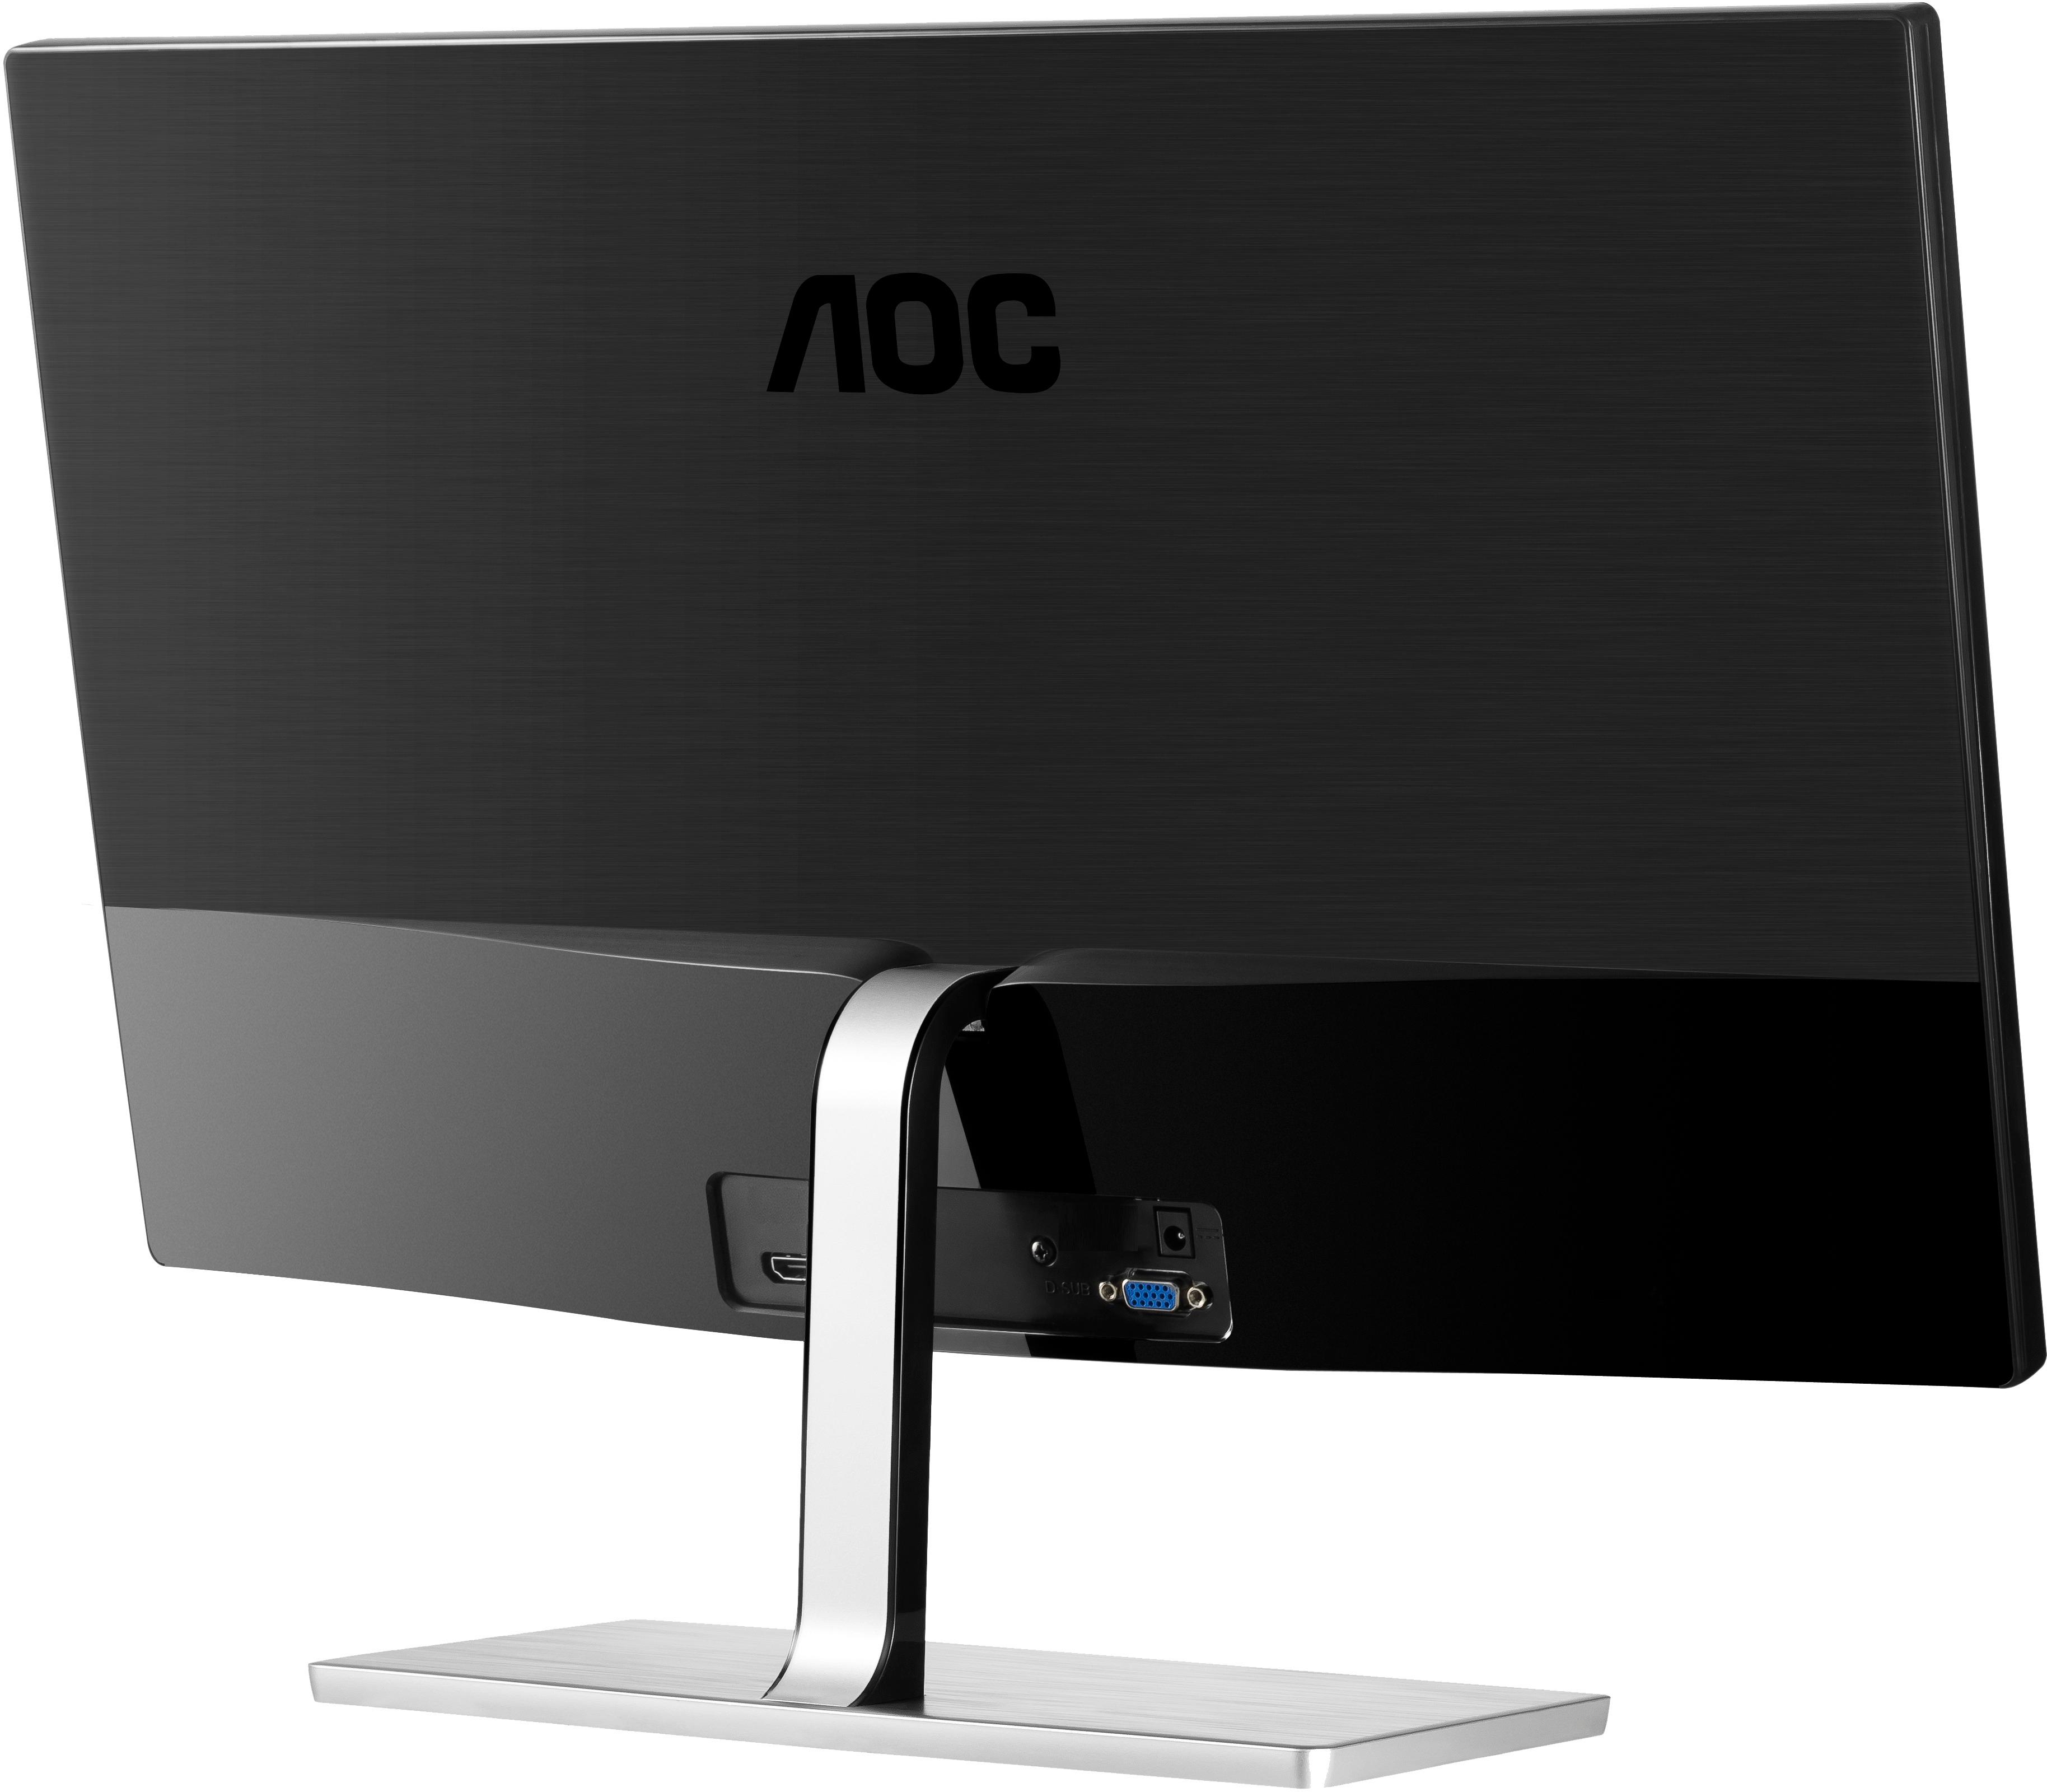 Best Buy: AOC 19.5 LED HD Monitor Black E2060SWD